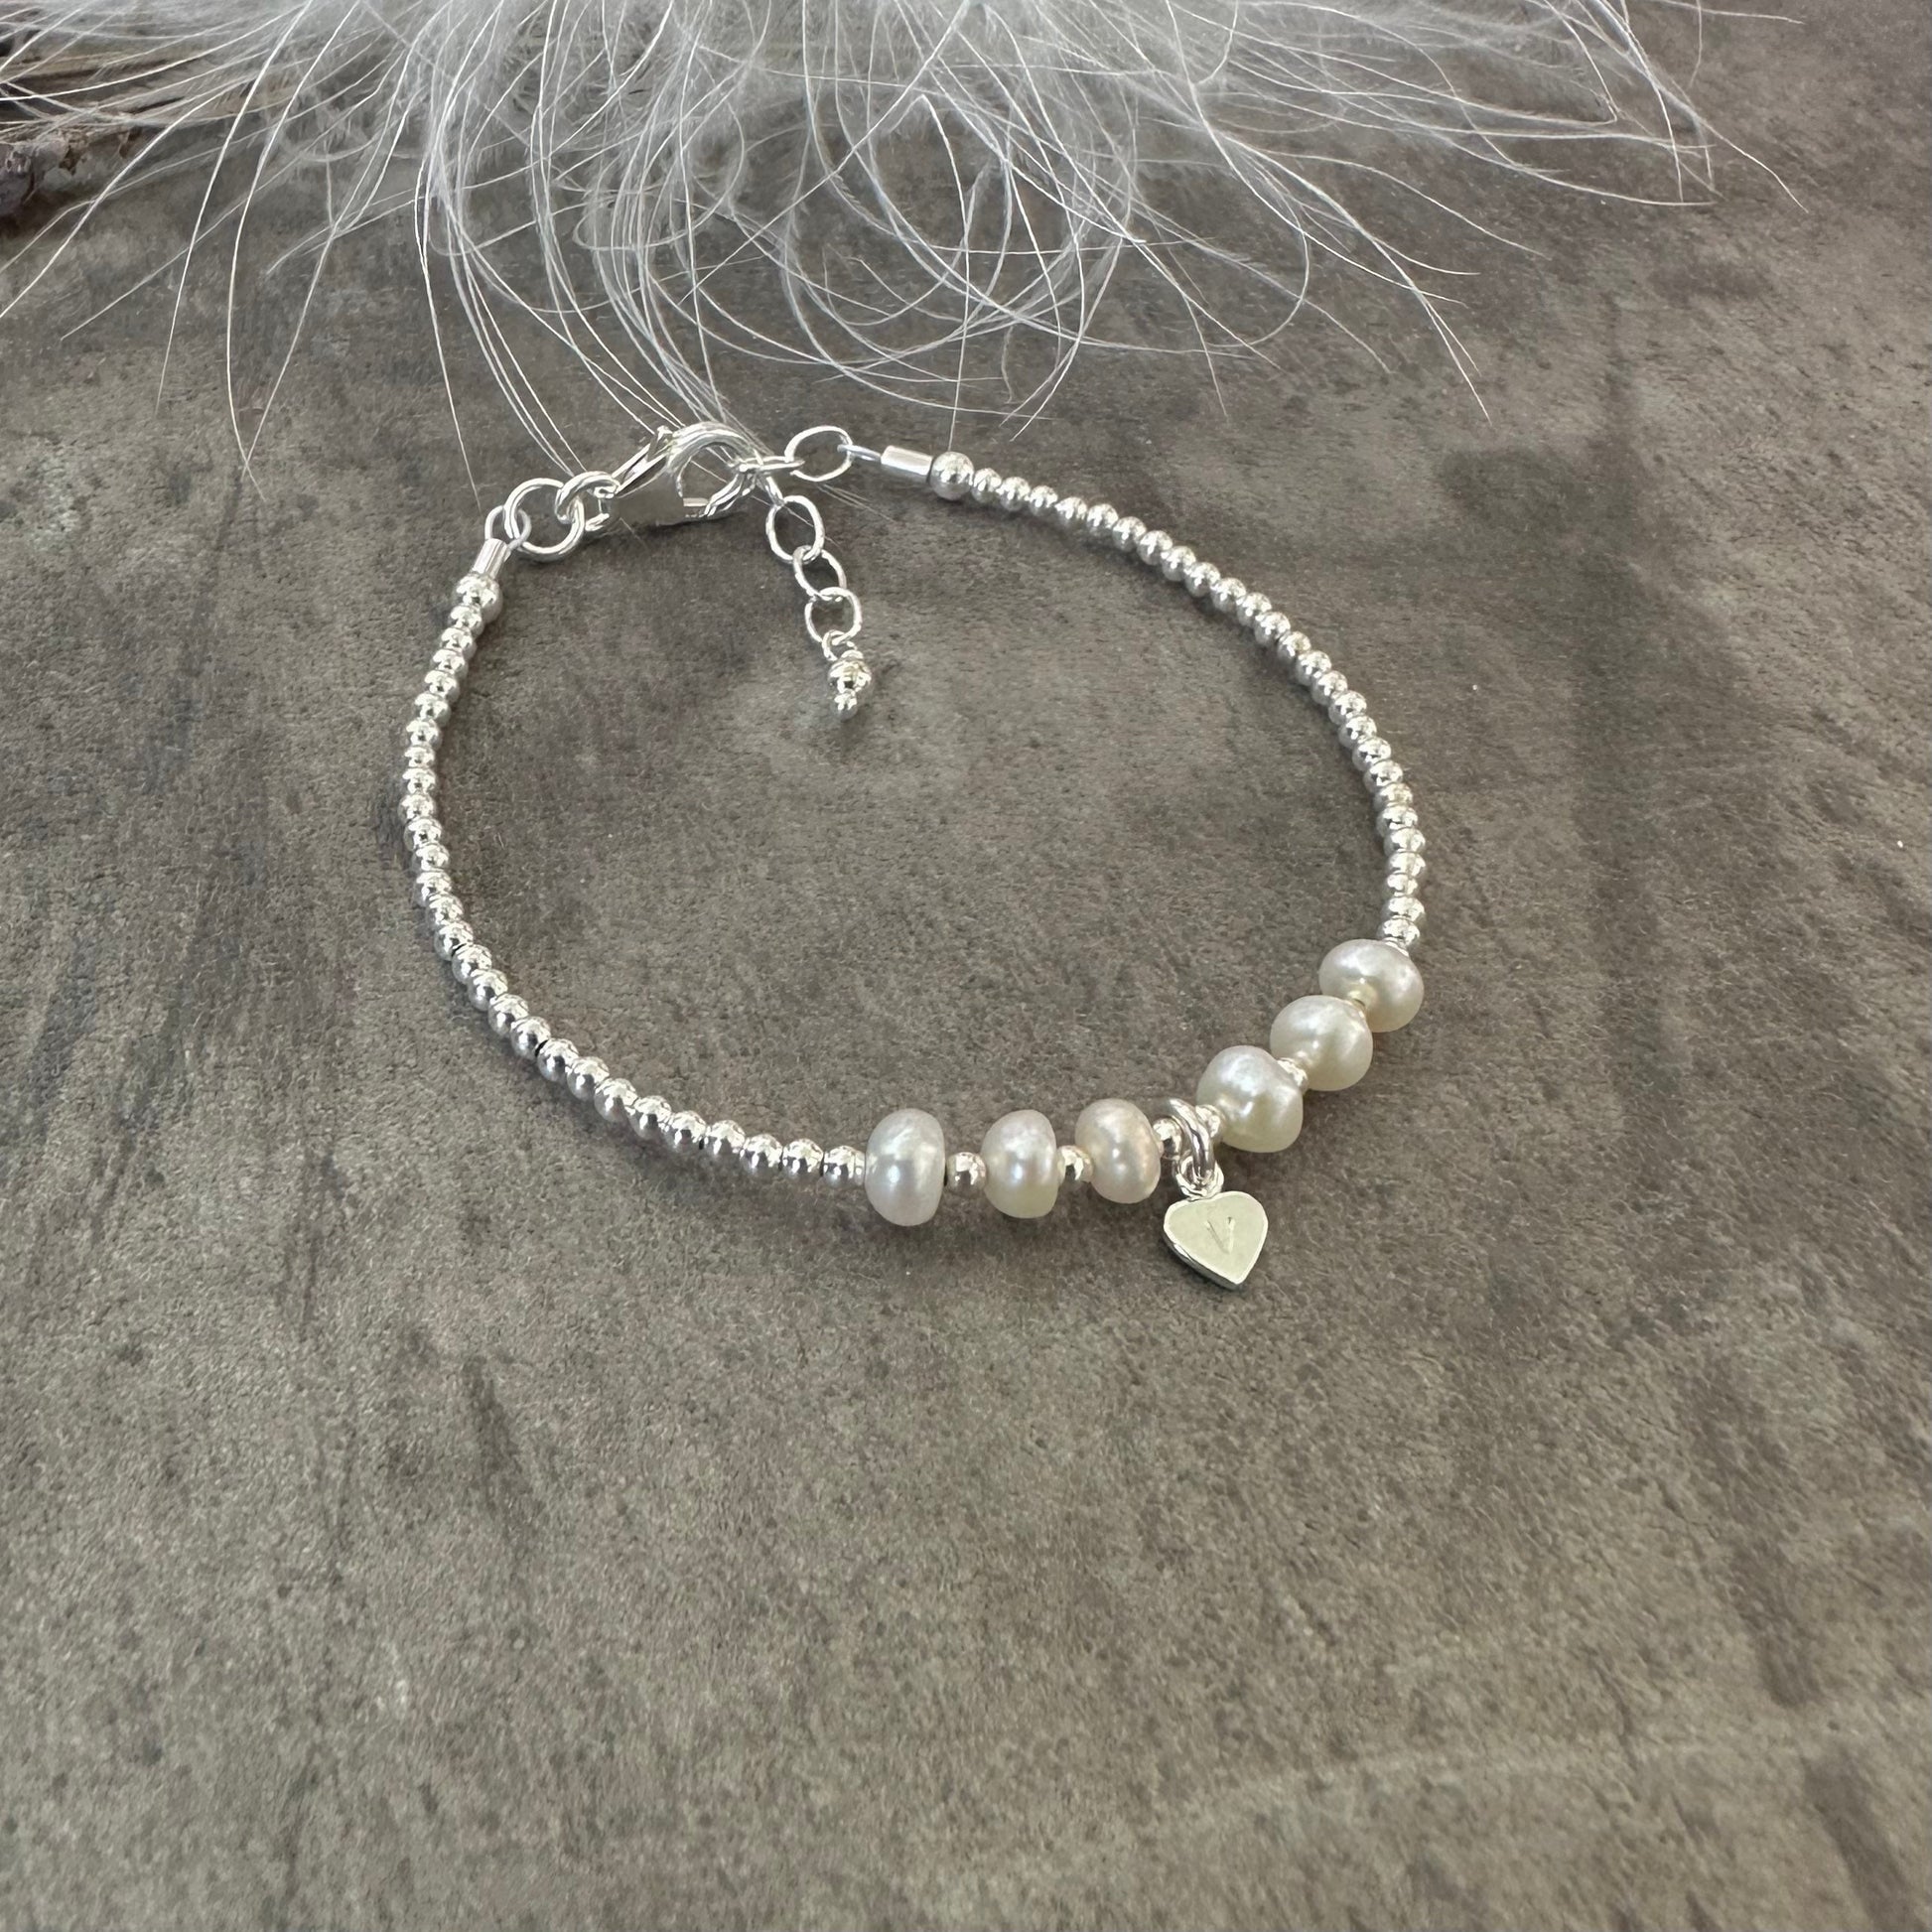 Personalised Pearl Bracelet, Dainty June Birthstone Jewellery in Sterling Silver nft